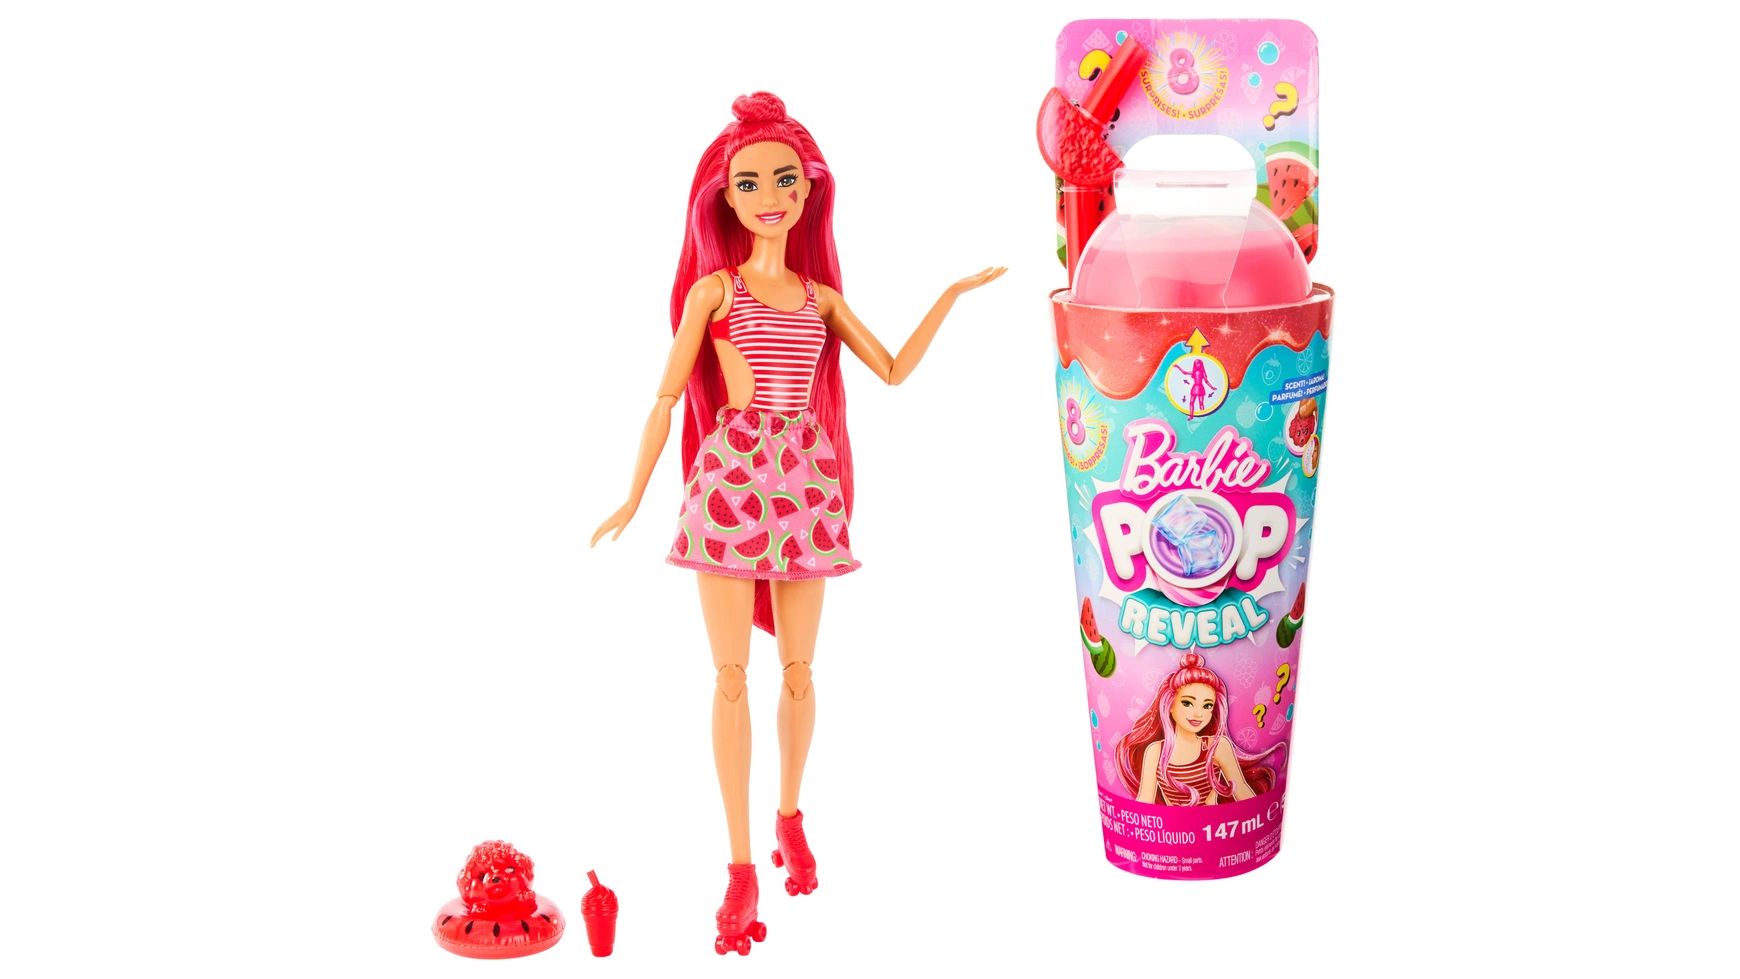 Barbie Поп! Серия Reveal Barbie Juicy Fruits Арбуз barbie colour reveal festival lights set